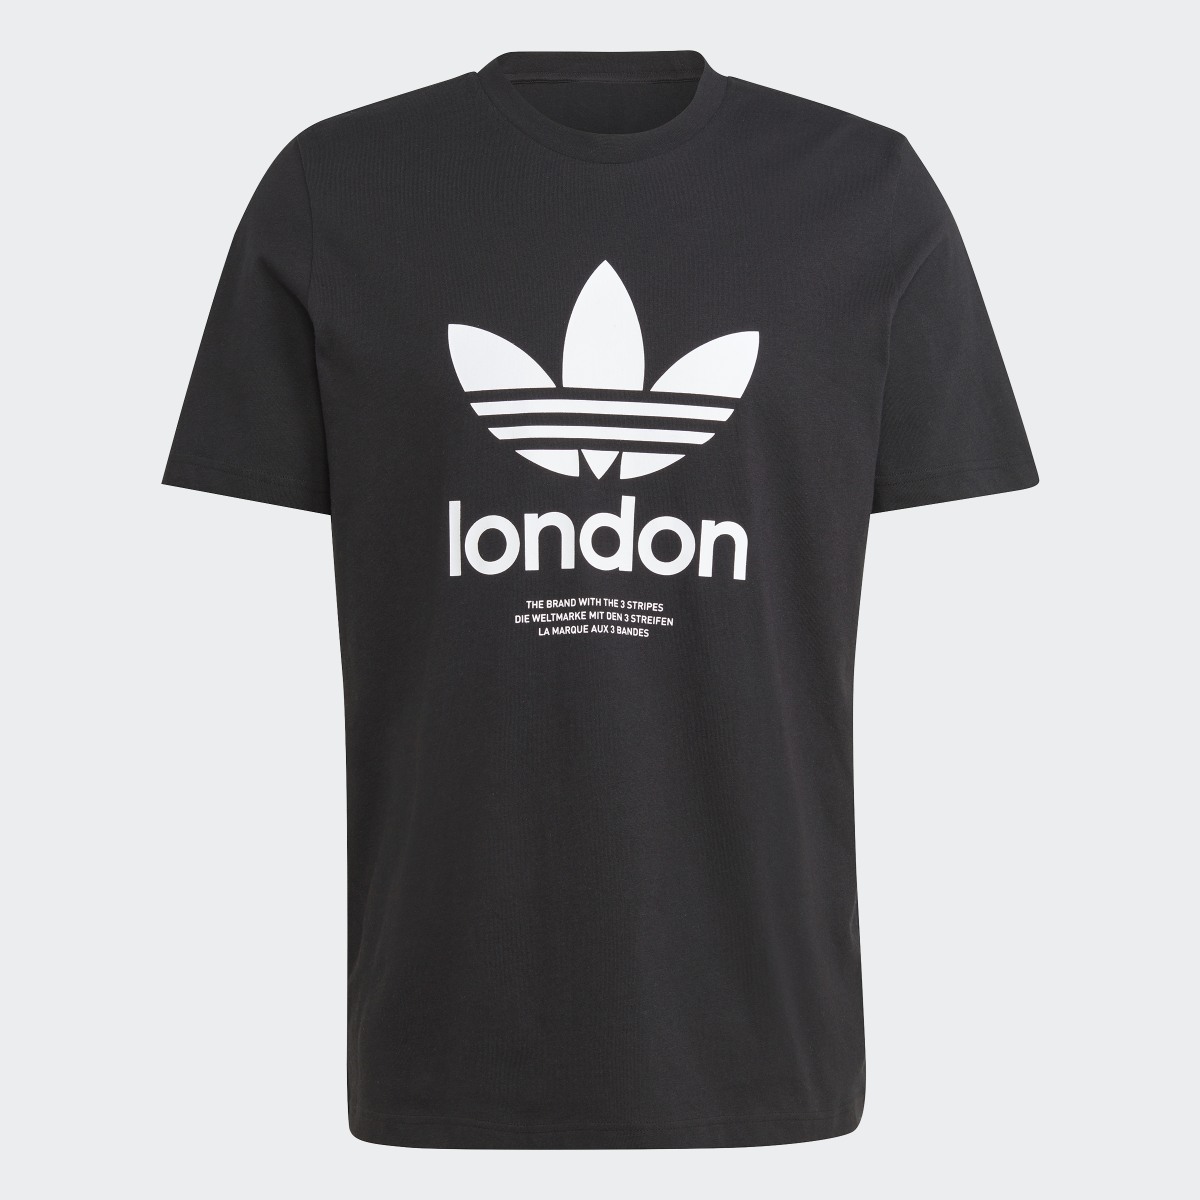 Adidas T-shirt Icone London City Originals. 5